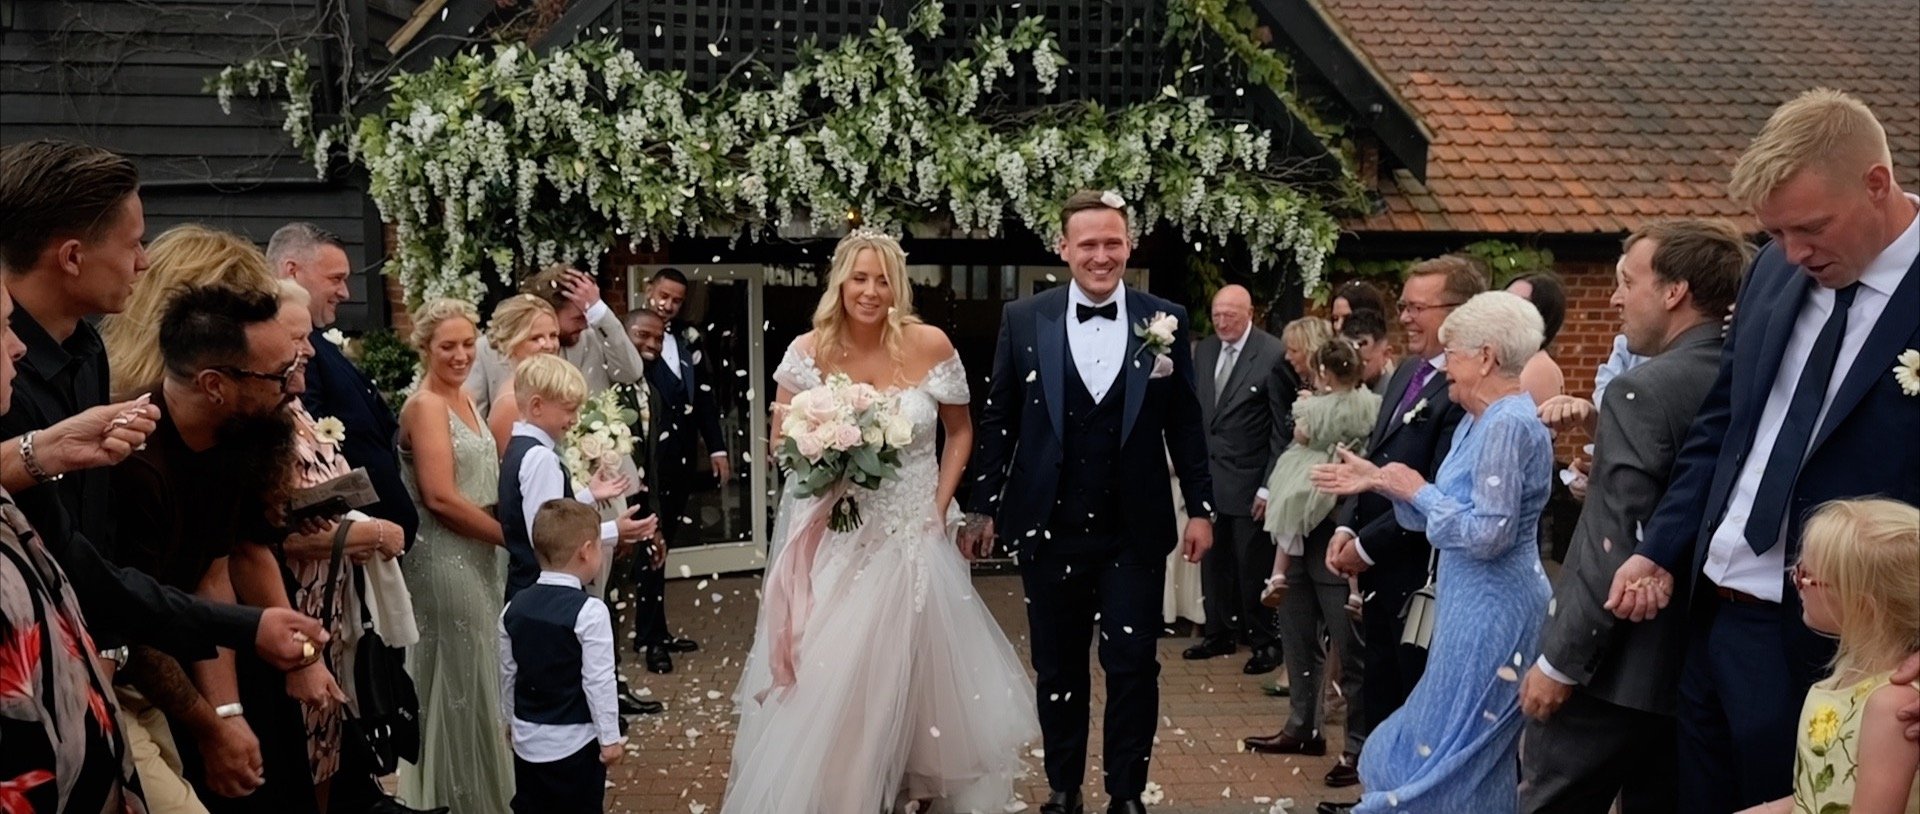 Crondon Park Wedding Videography - 3 Cheers Media - Just Married.jpg